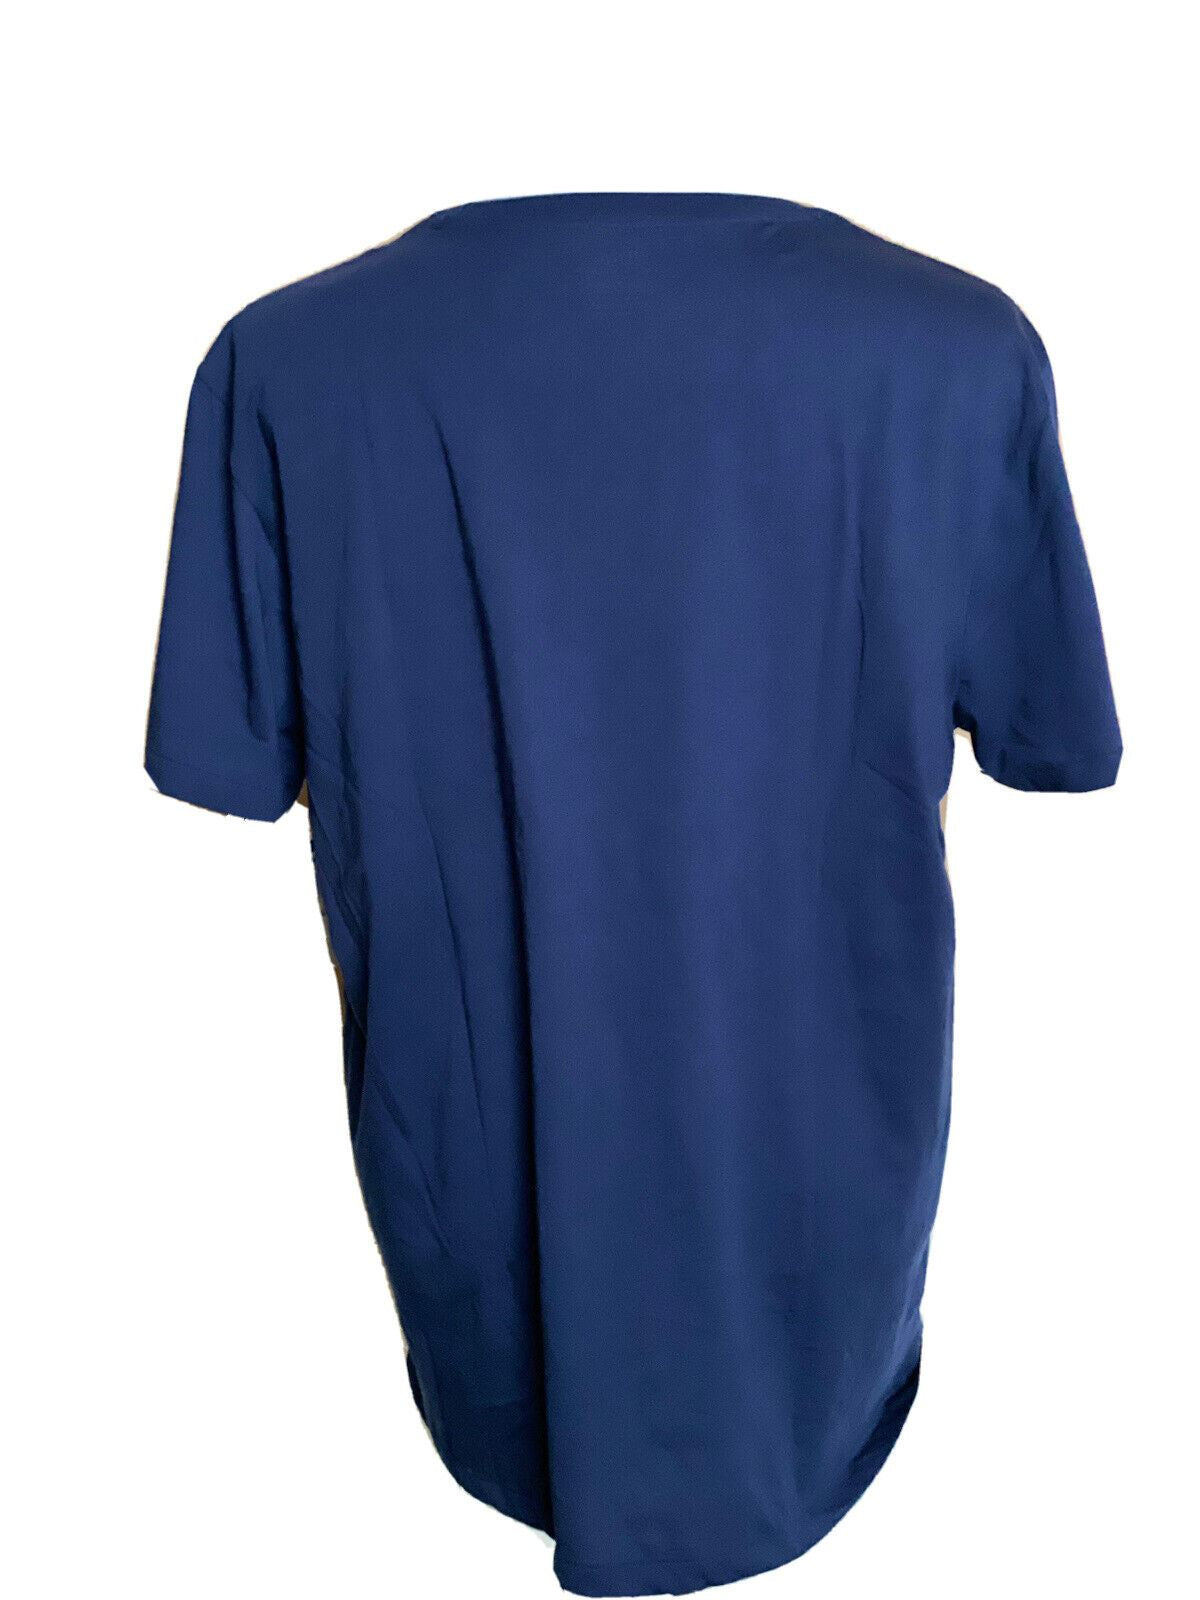 NWT Polo Ralph Lauren футболка с коротким рукавом и логотипом, синяя, XL 